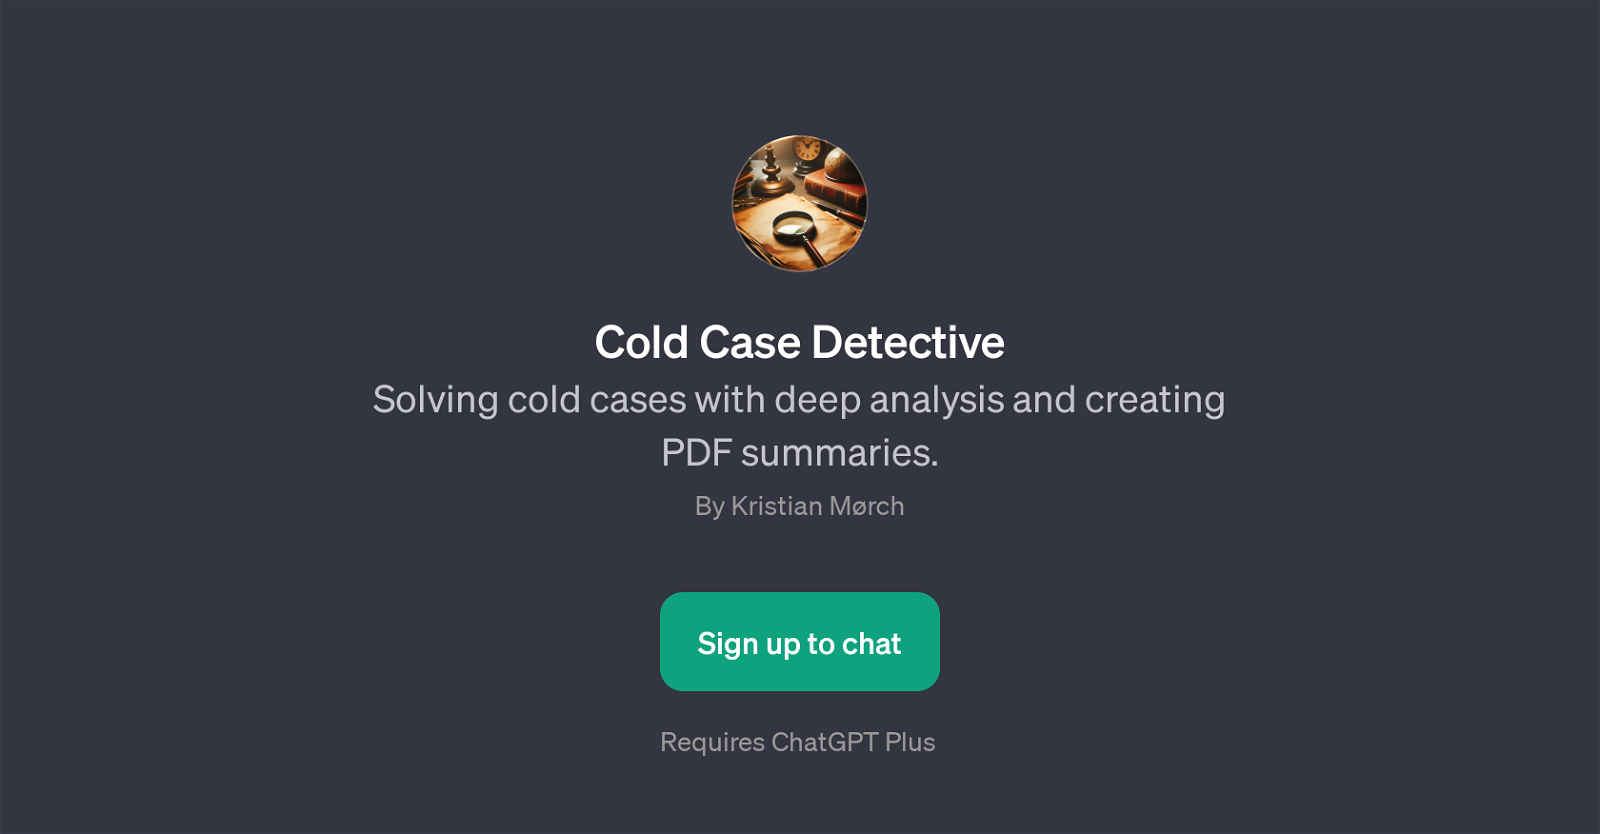 Cold Case Detective website